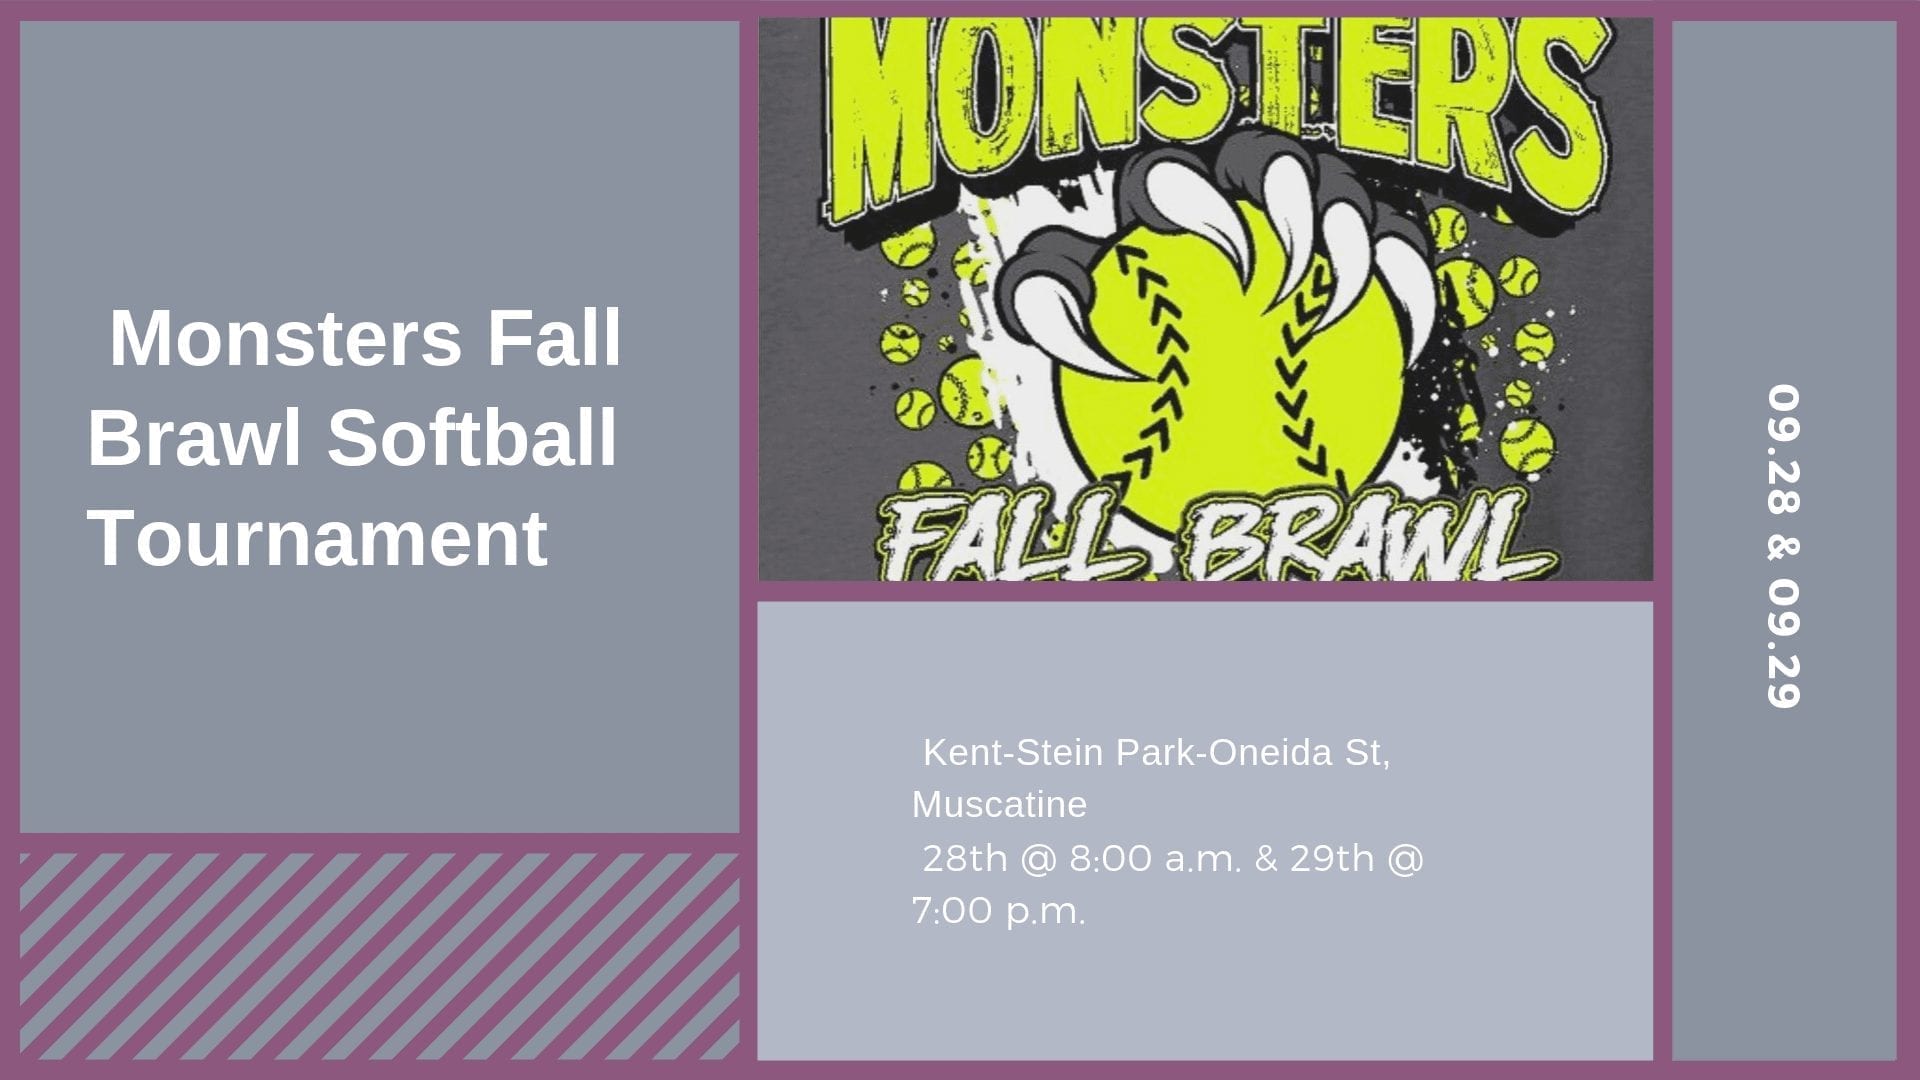 Monsters Fall Brawl Softball Tournament